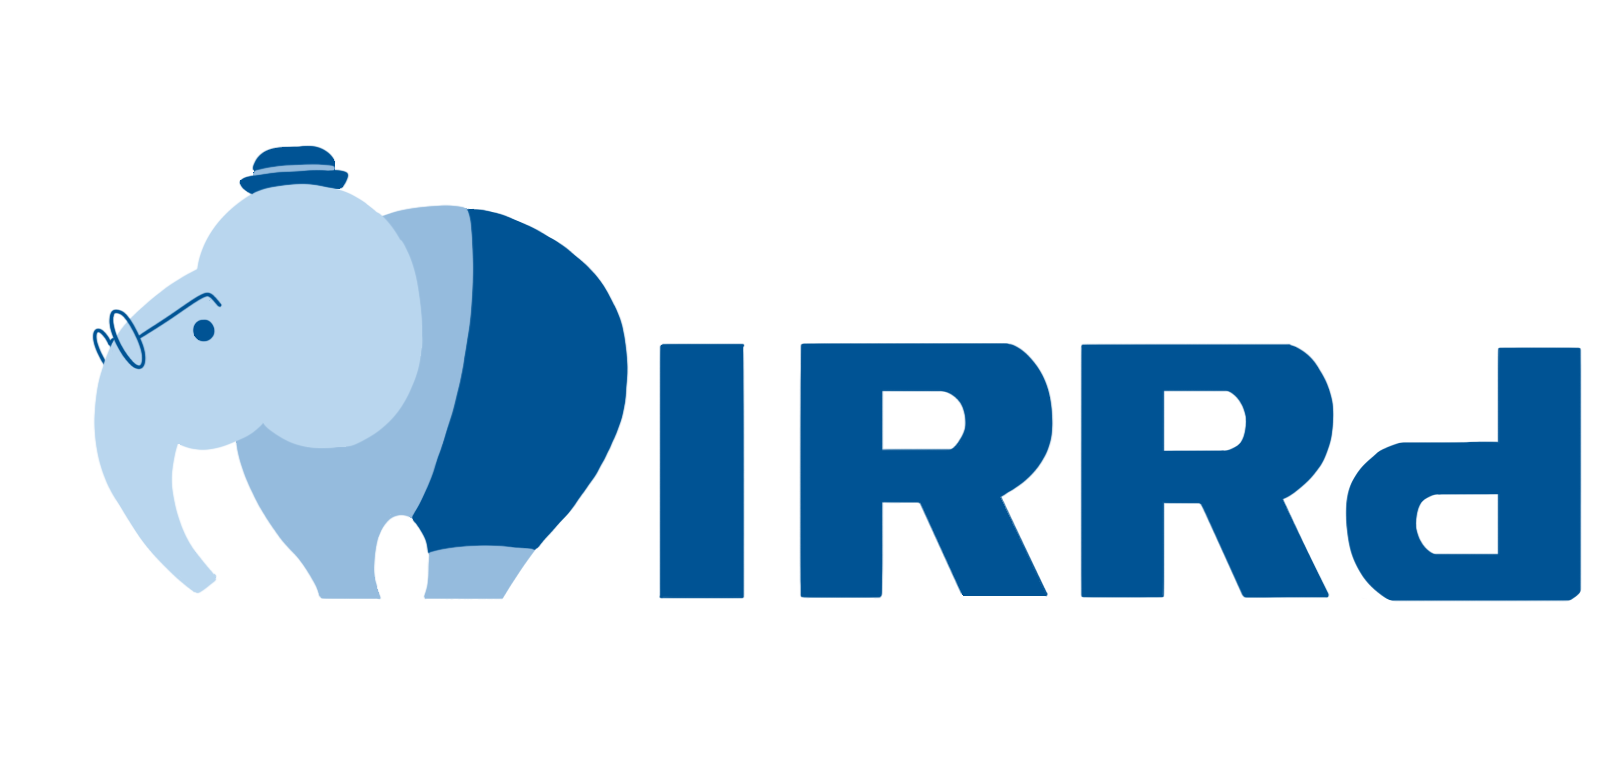 IRRd logo. Copyright (c) 2019, Natasha Allegri